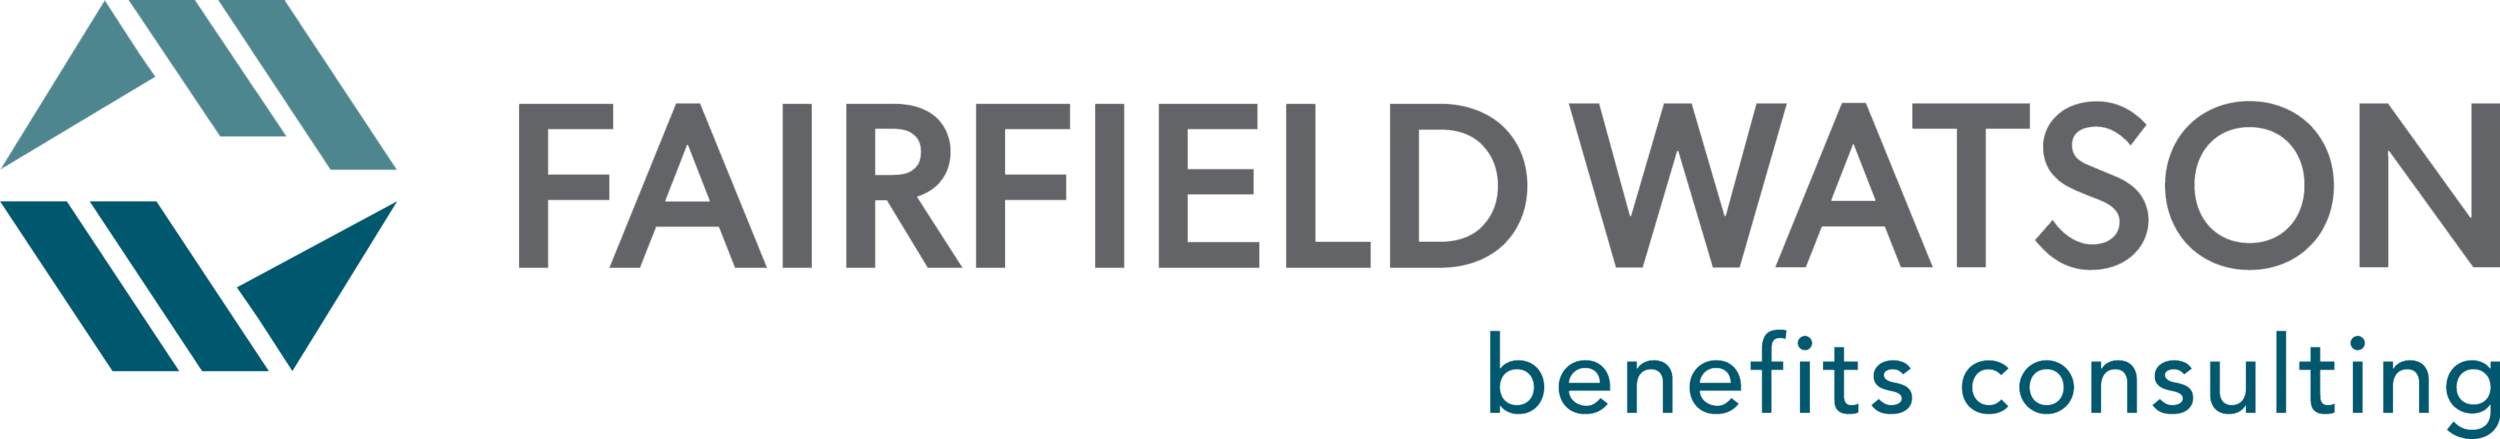 FairfieldWatson-Logo-Lockup3-BenefitsConsulting-CMYK (002).png